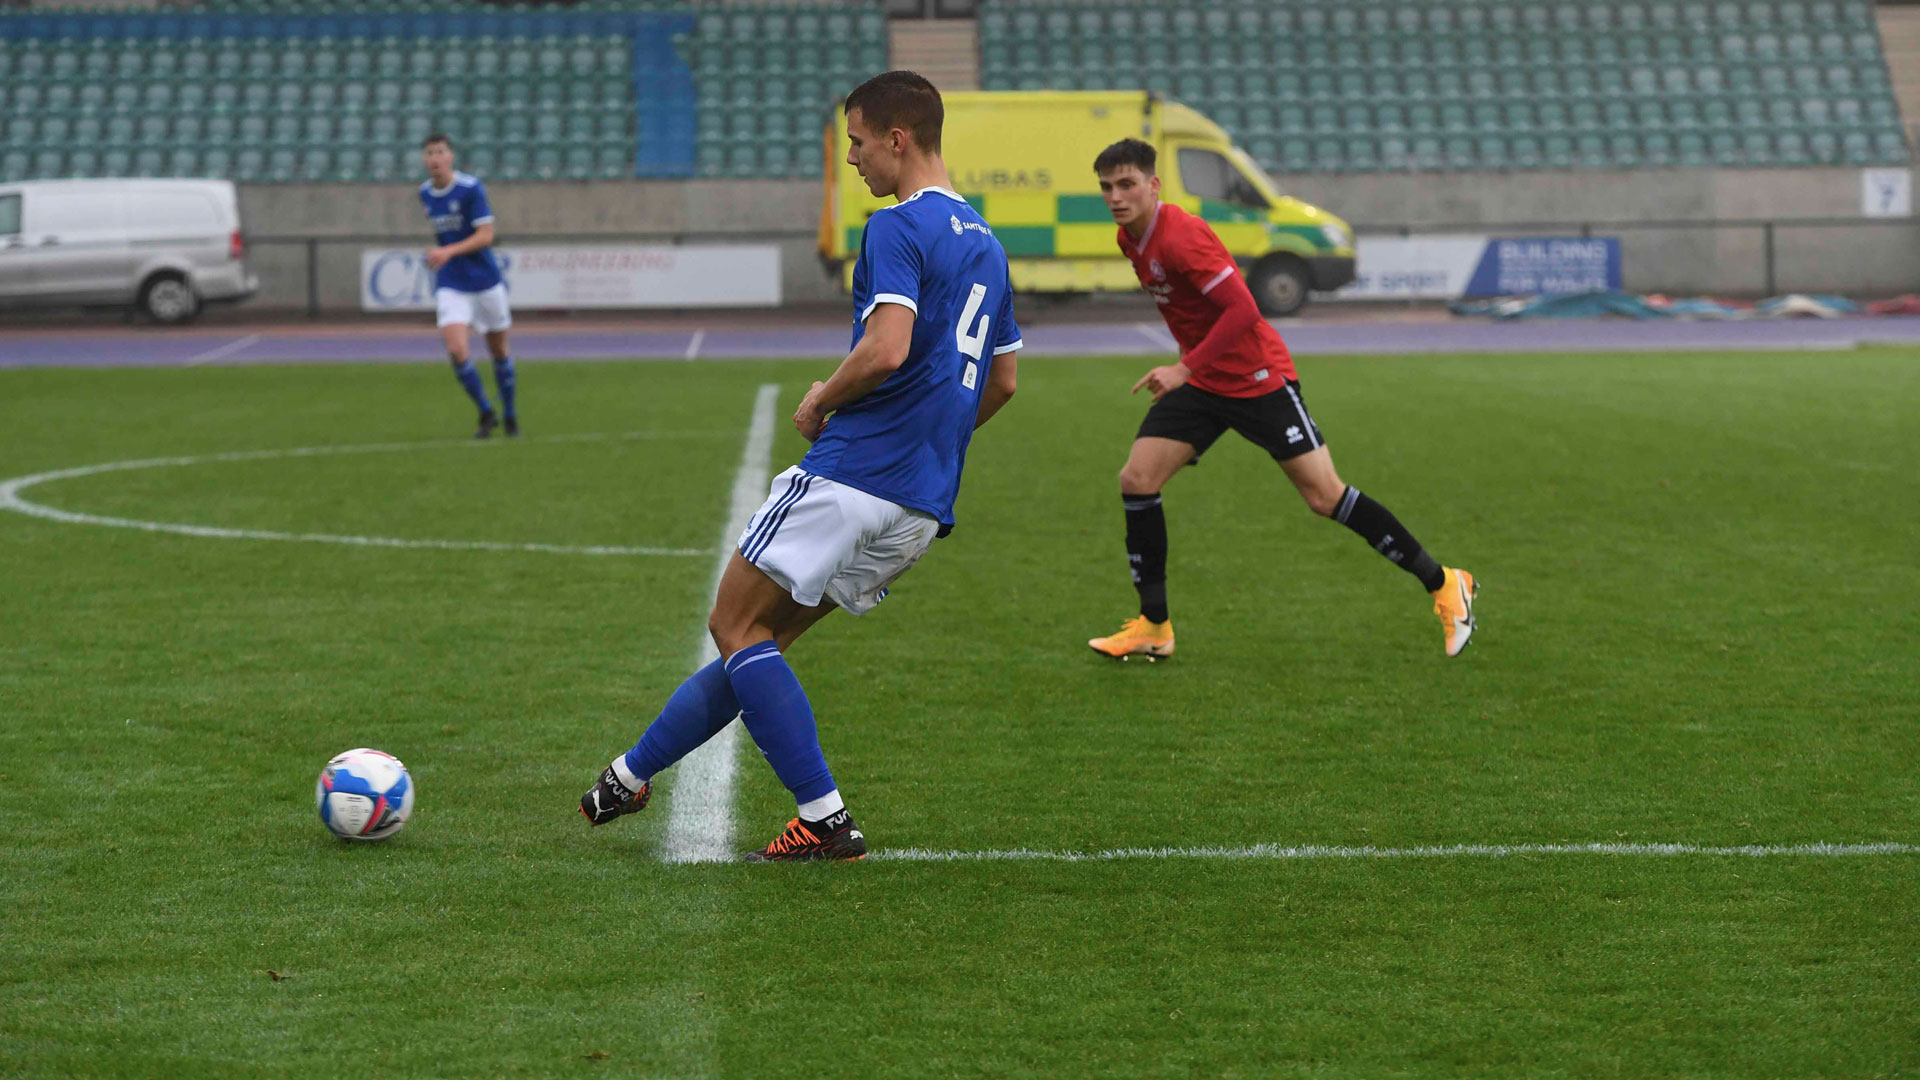 Filip Benković in action in Leckwith...